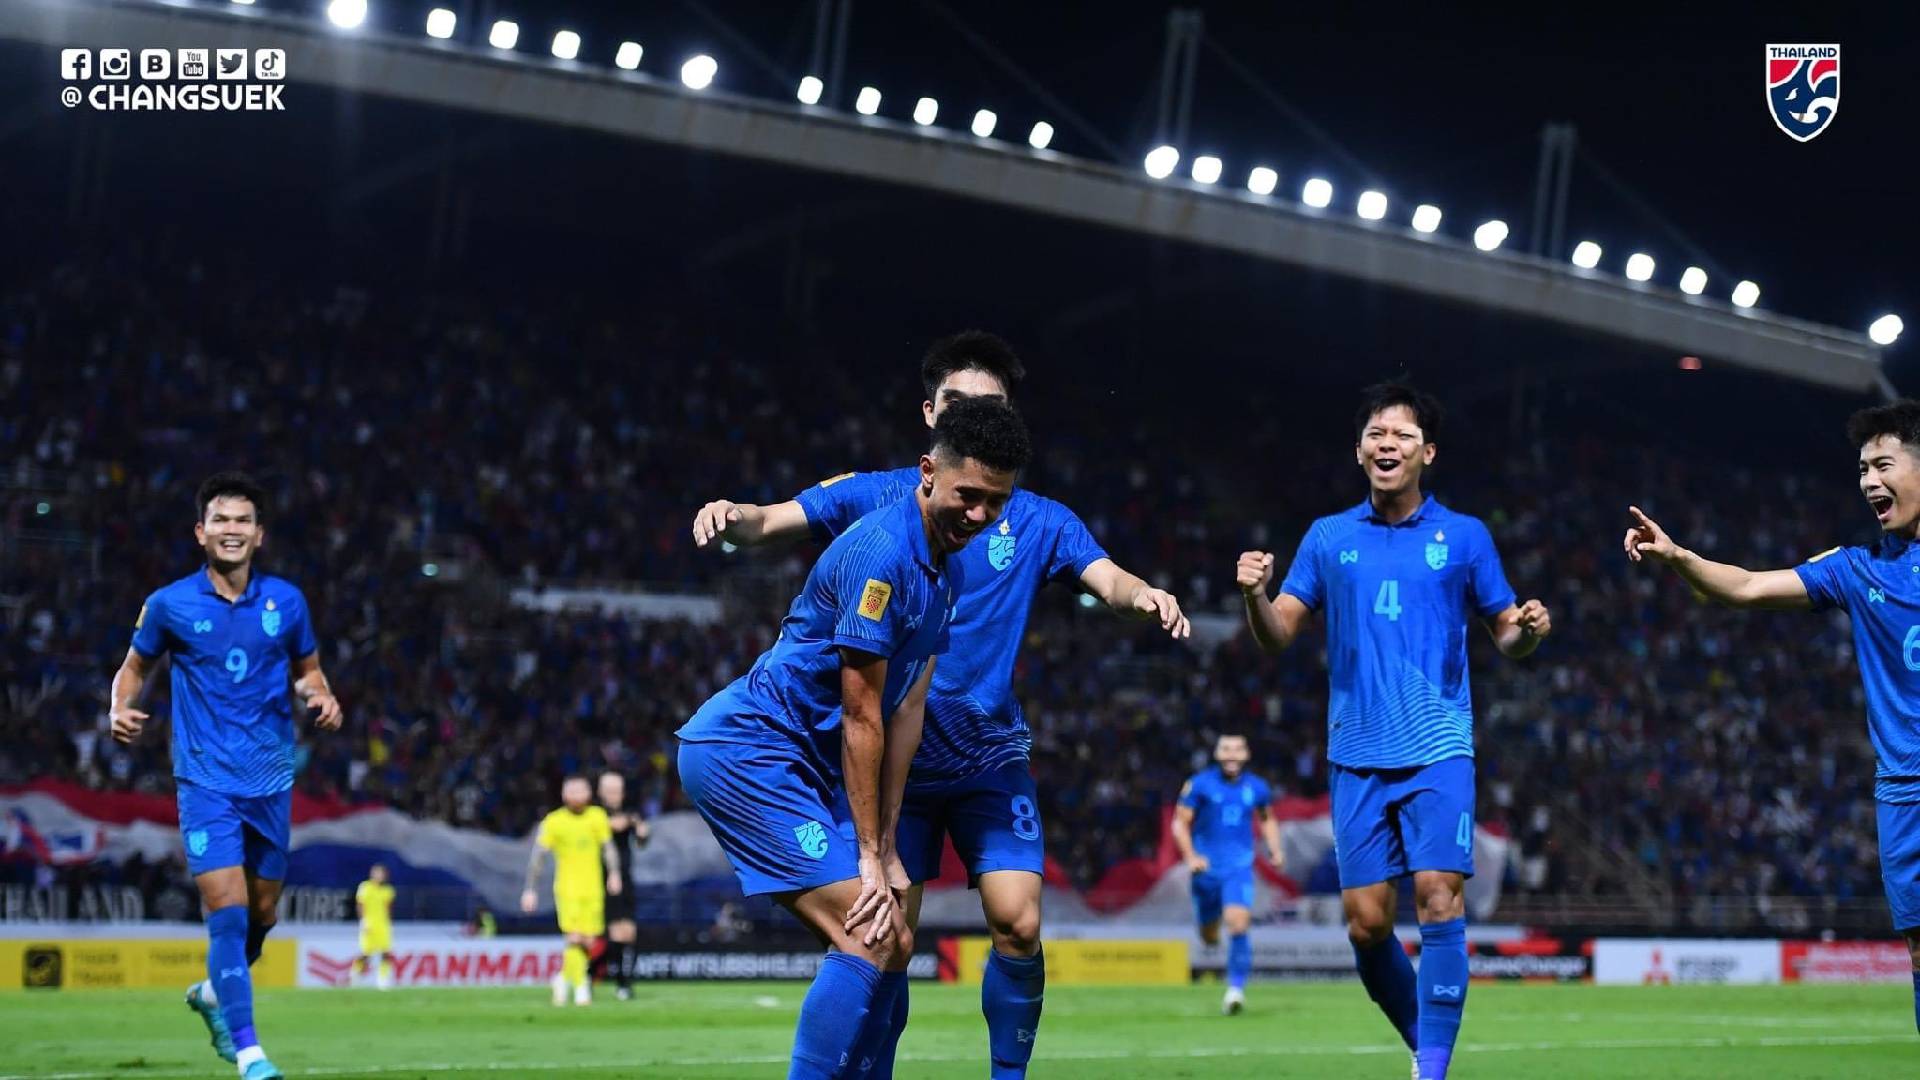 Thailand Malaysia Piala AFF 2022 Changsuek 1 Thailand Sertai Piala Asia Barat